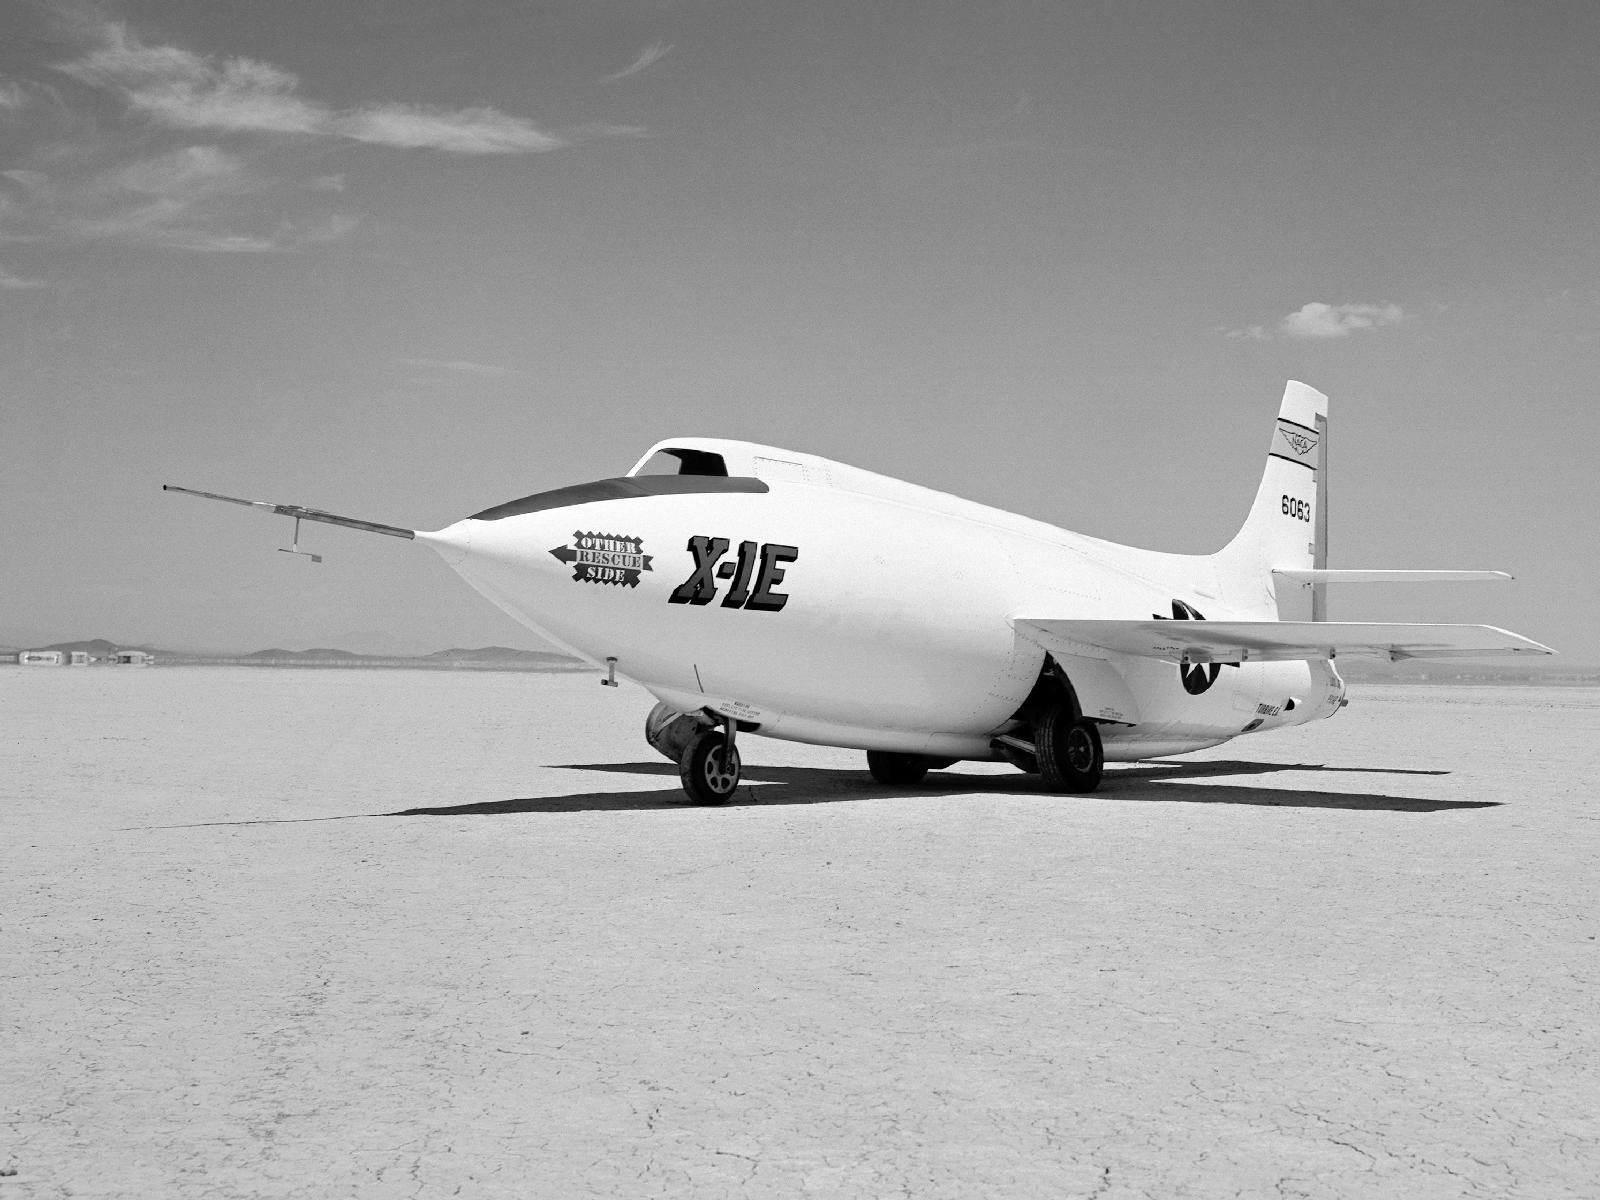 Bell X-1E 46-063 on Rogers Dry Lake. (NASA)